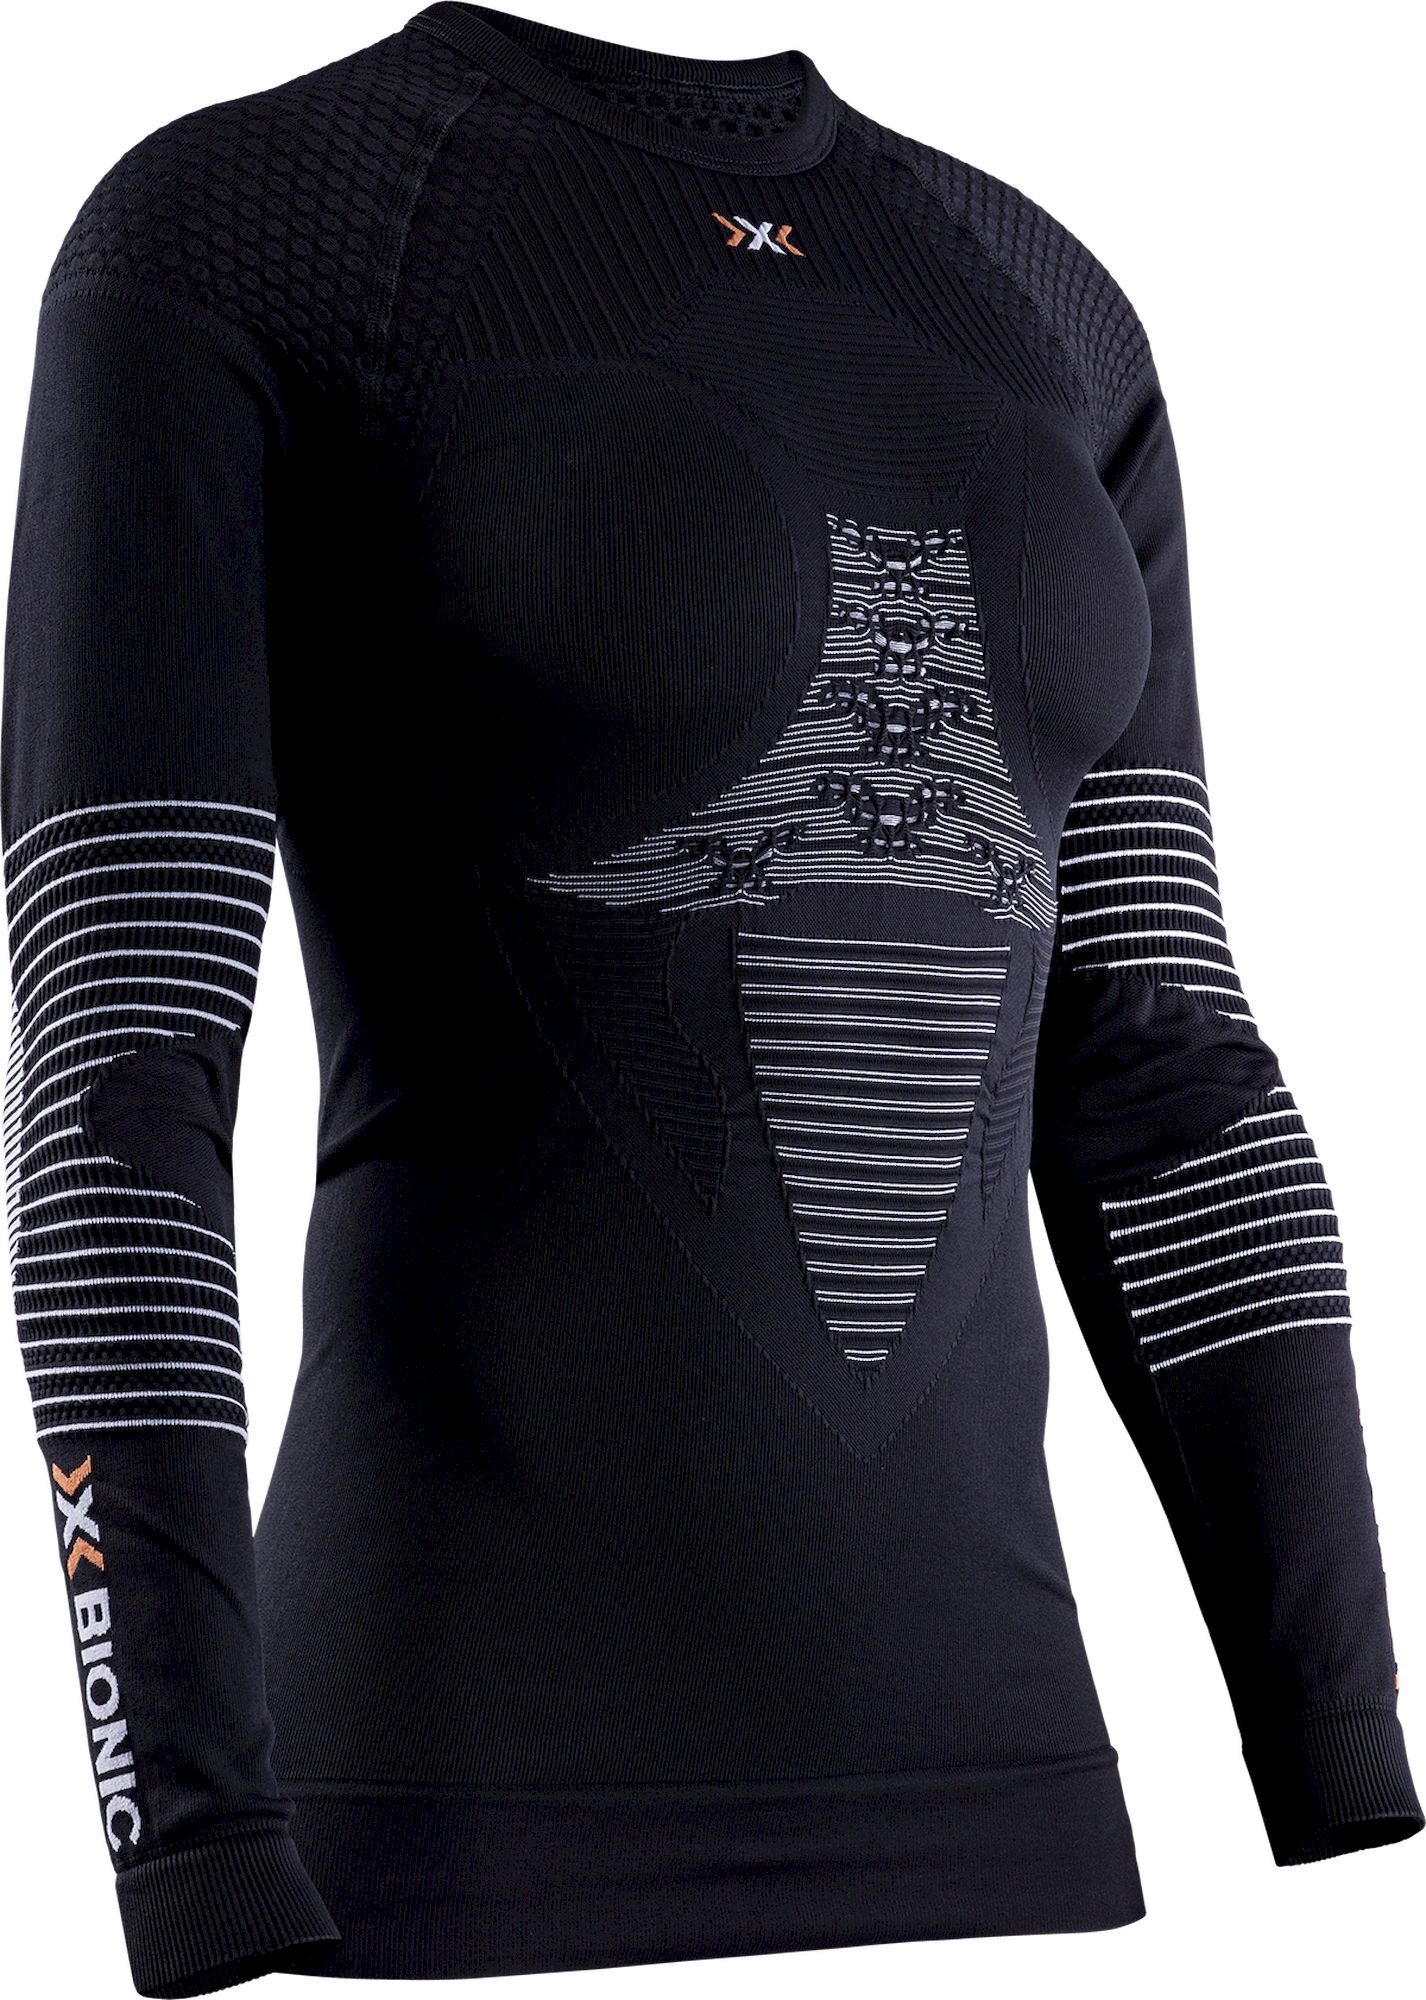 X-Bionic Energizer 4.0 Shirt Long Sleeve - Maillot femme